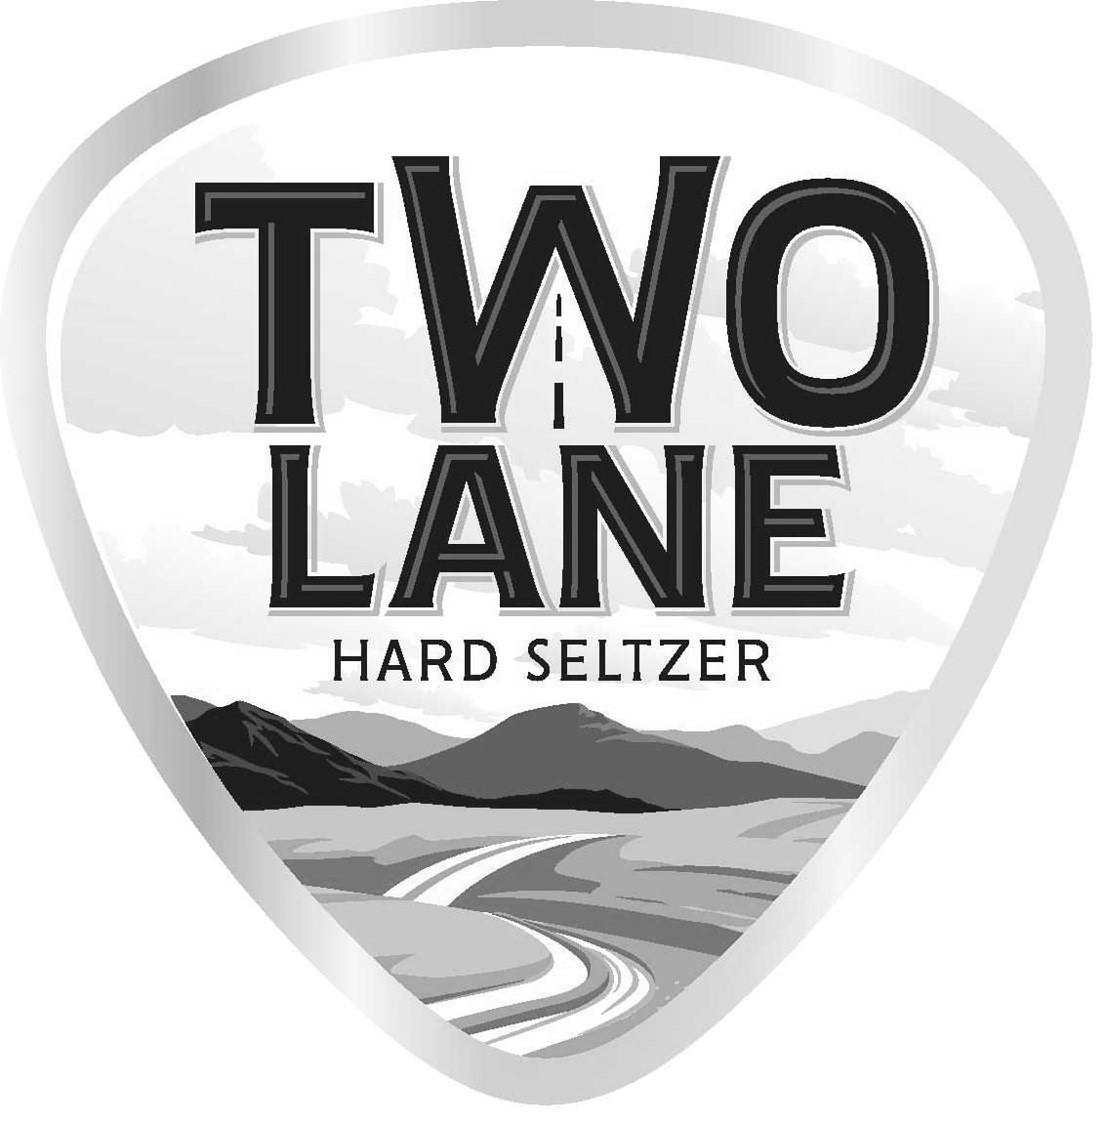  TWO LANE HARD SELTZER